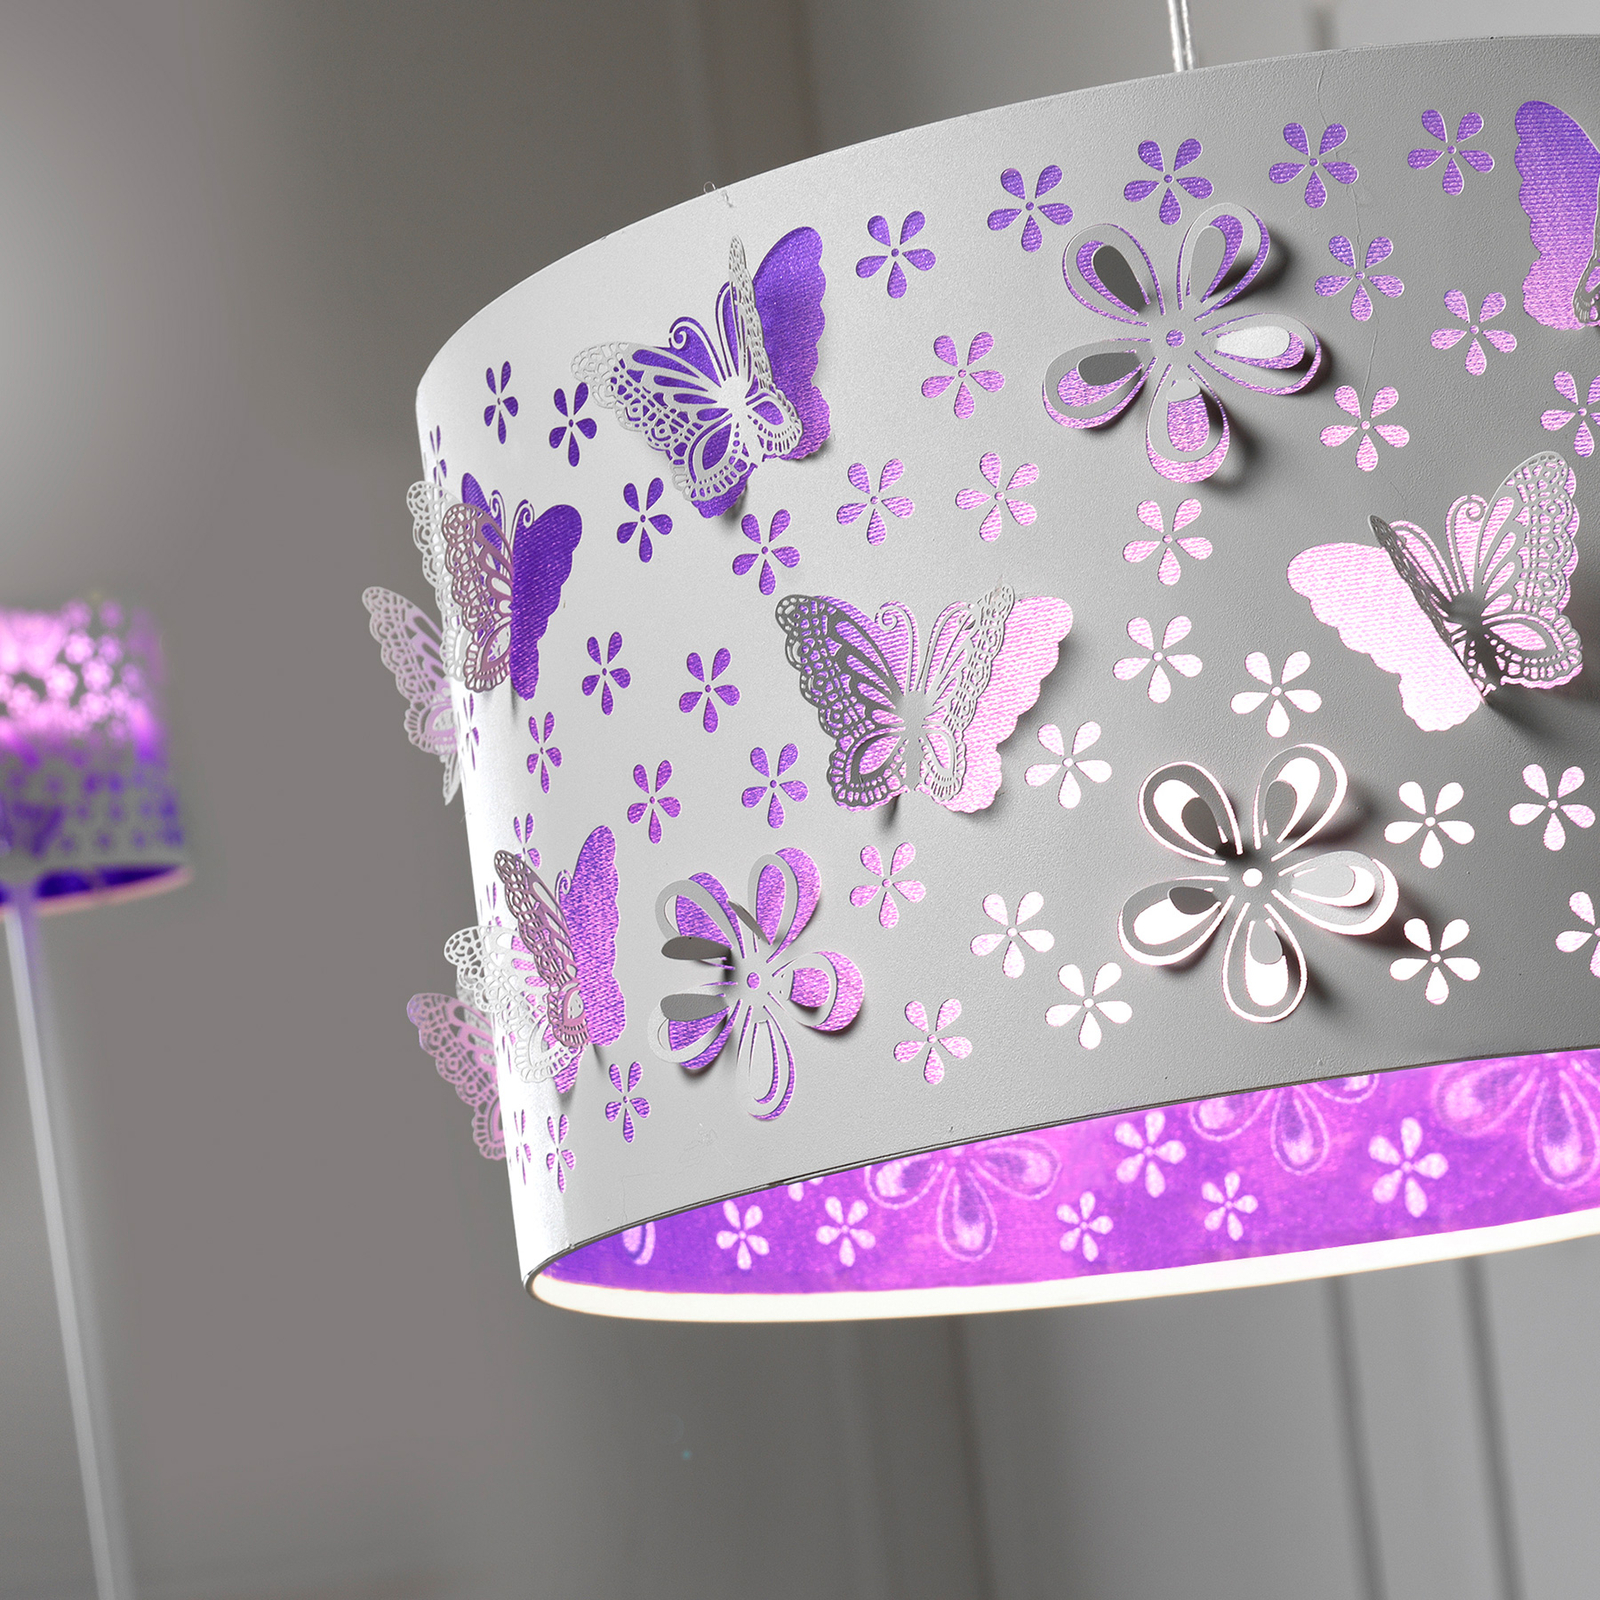 Titilla pendant light in white, lampshade purple inside